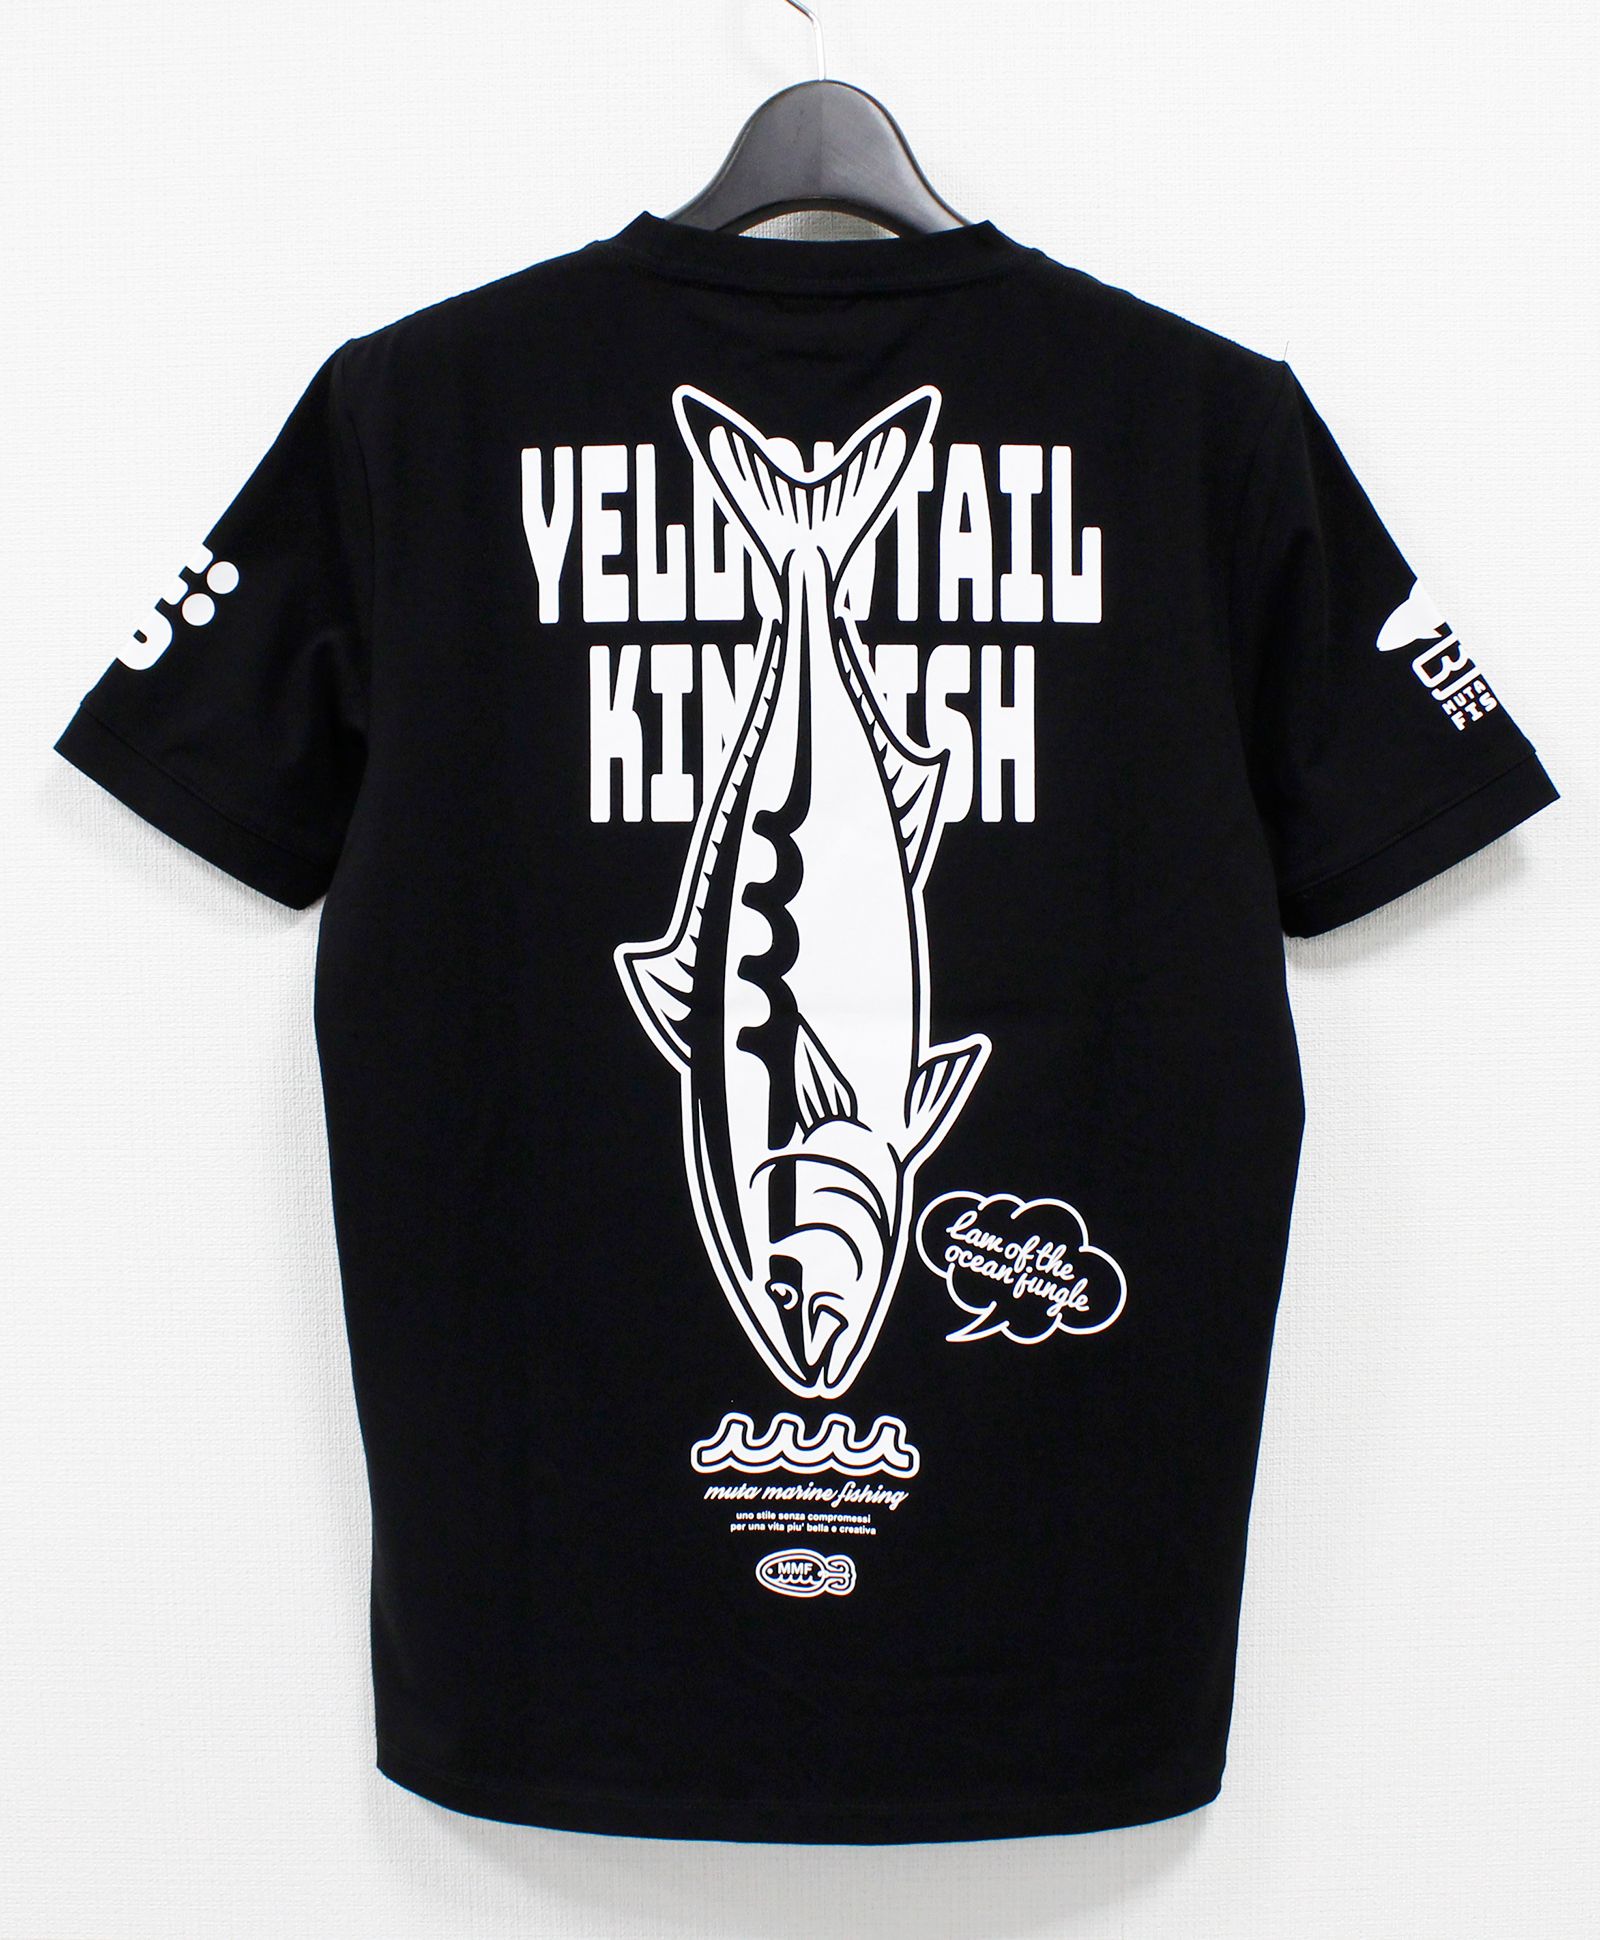 muta - Yellowtail Kingfish(ヒラマサ) Tシャツ / ブラック [MFMP 